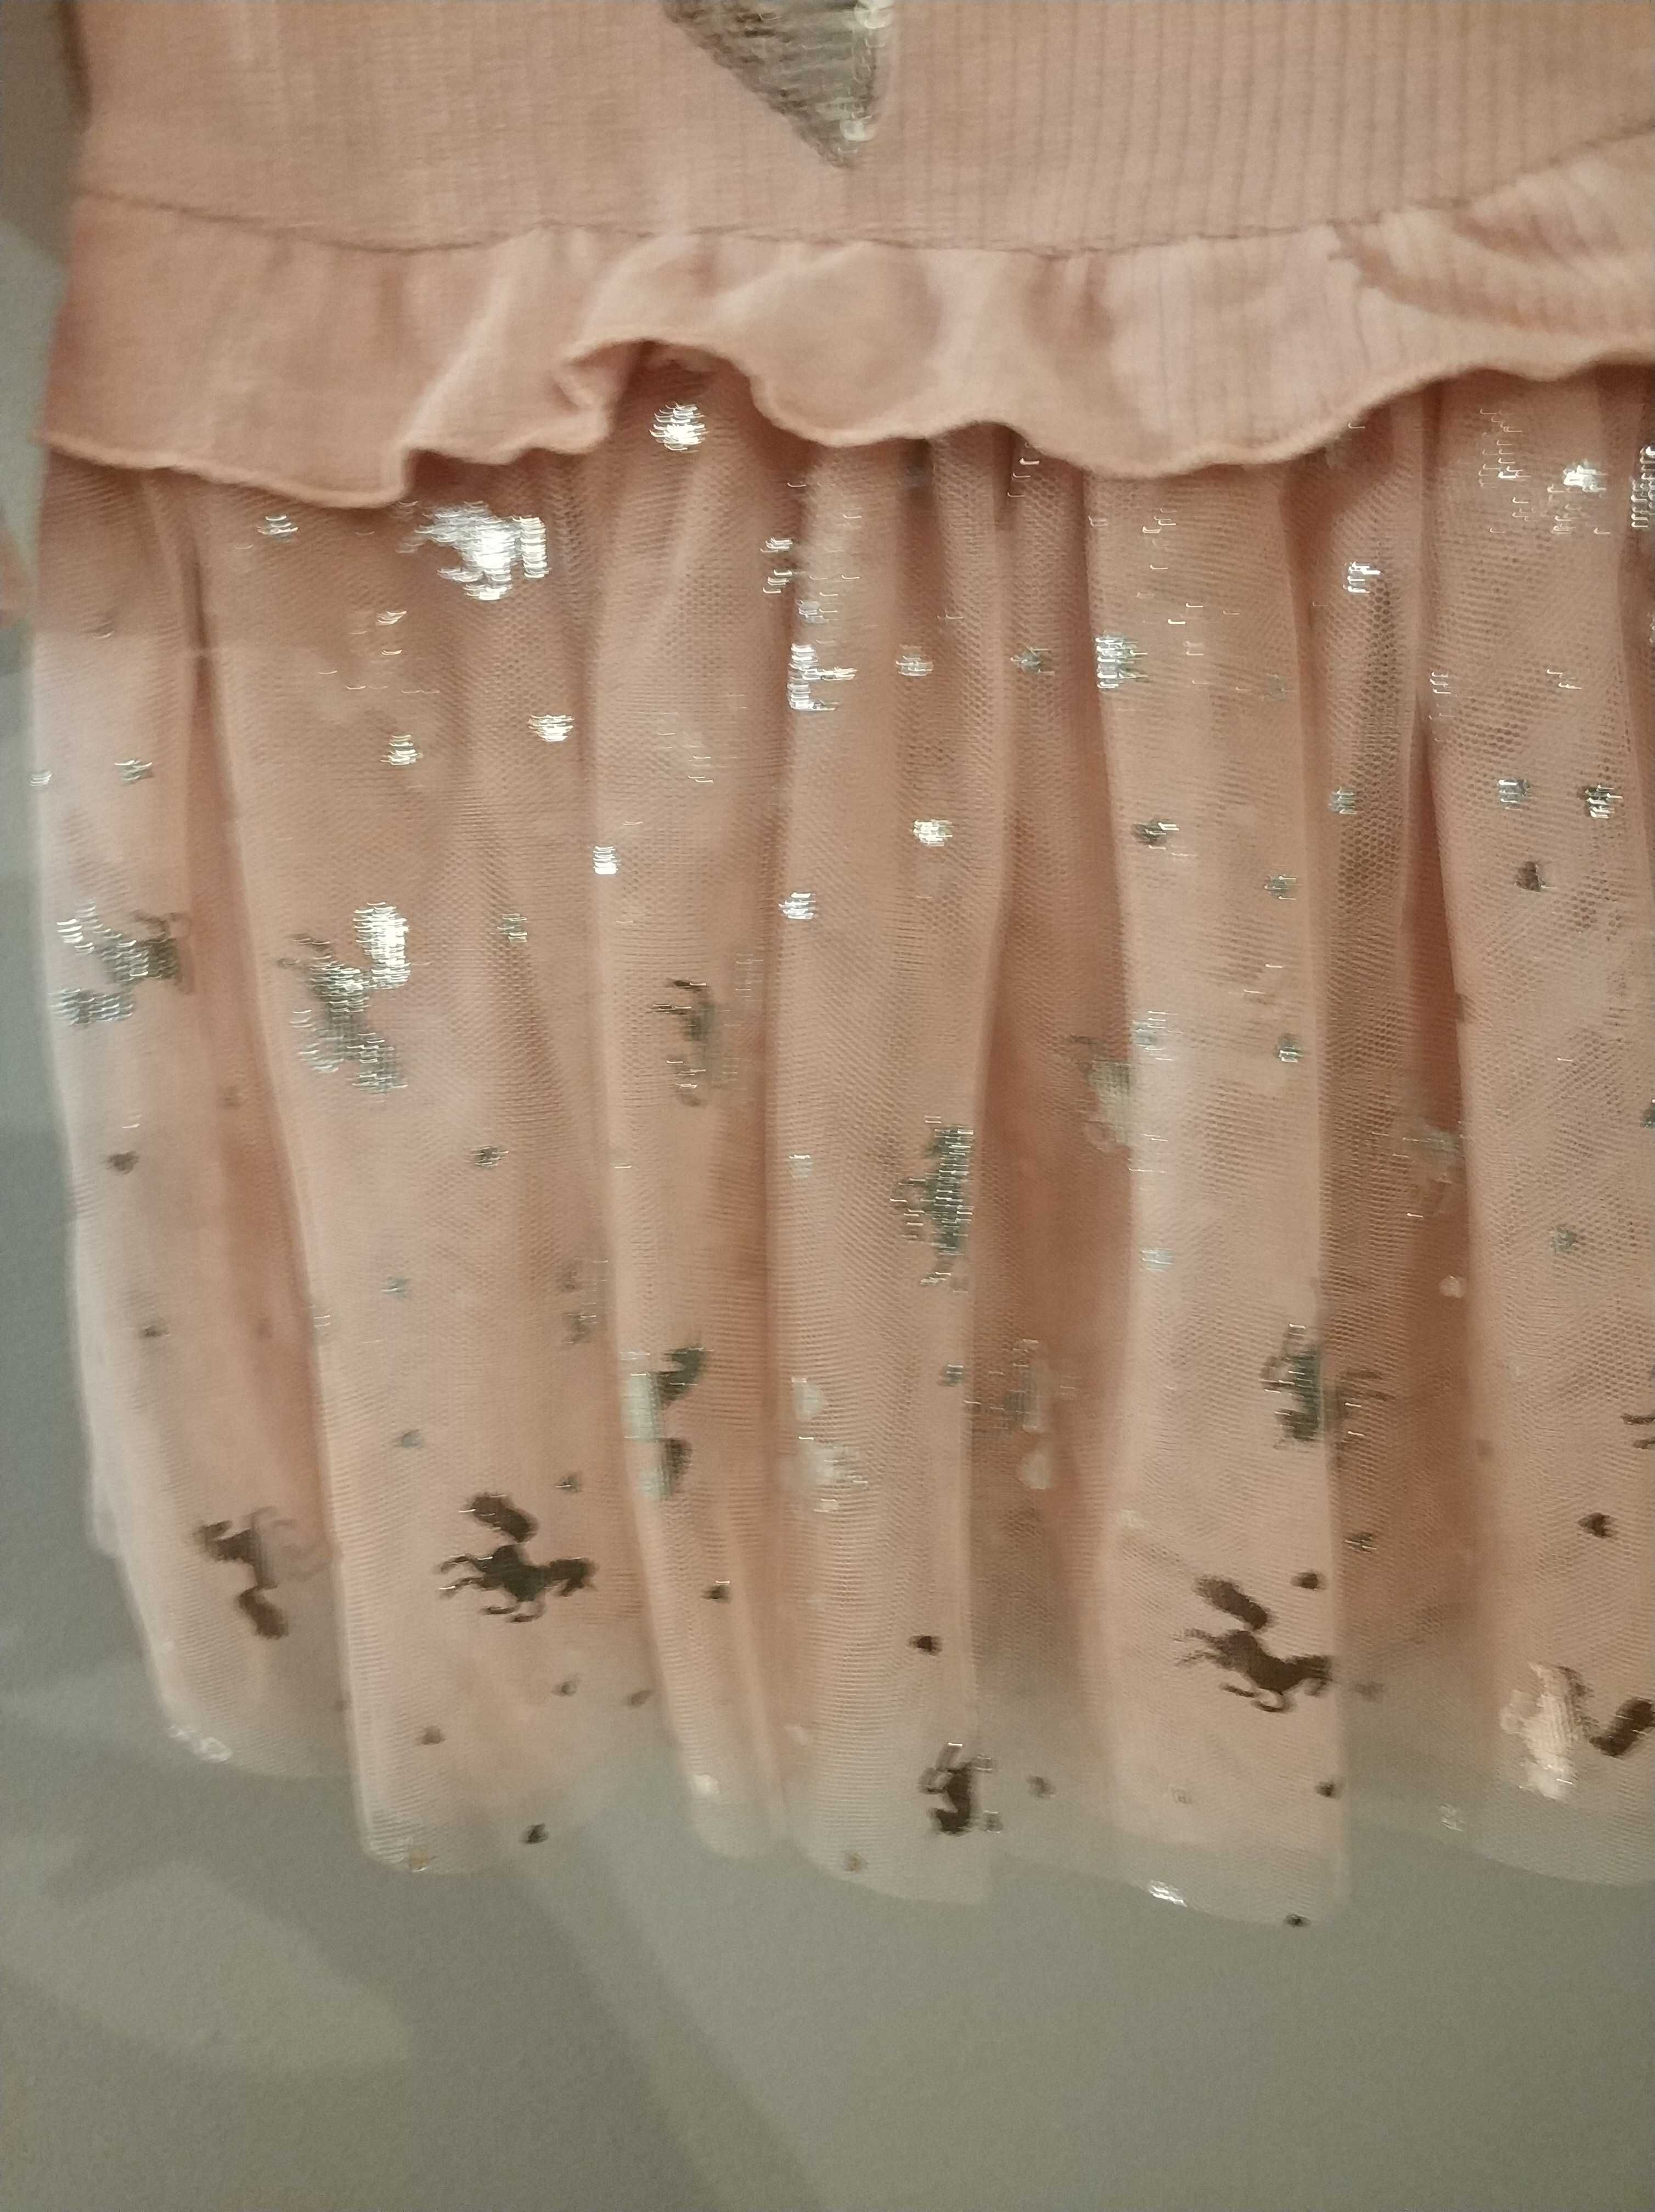 Komplet: tiulowa sukienka +opaska, rozmiar 68, nowa z metką